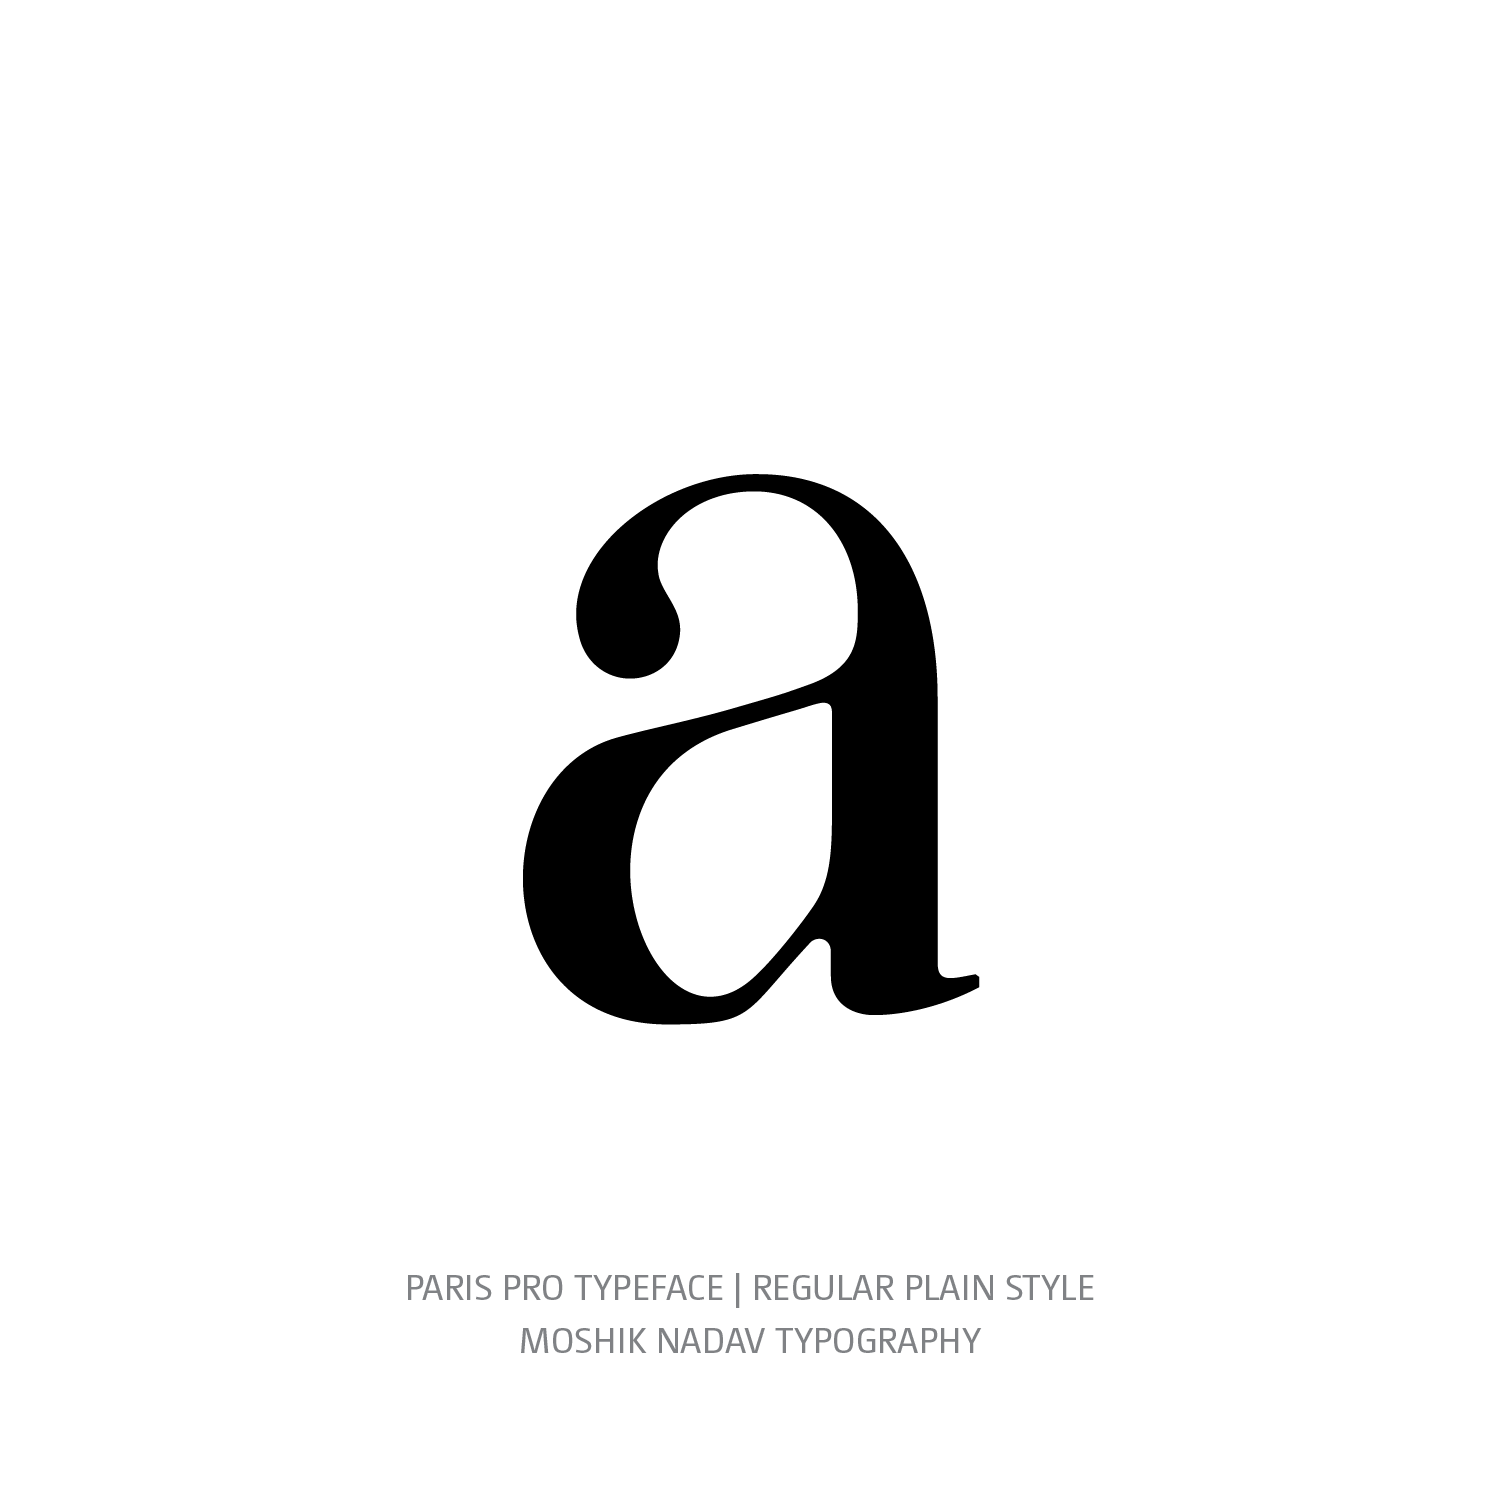 Paris Pro Typeface Regular Plain a